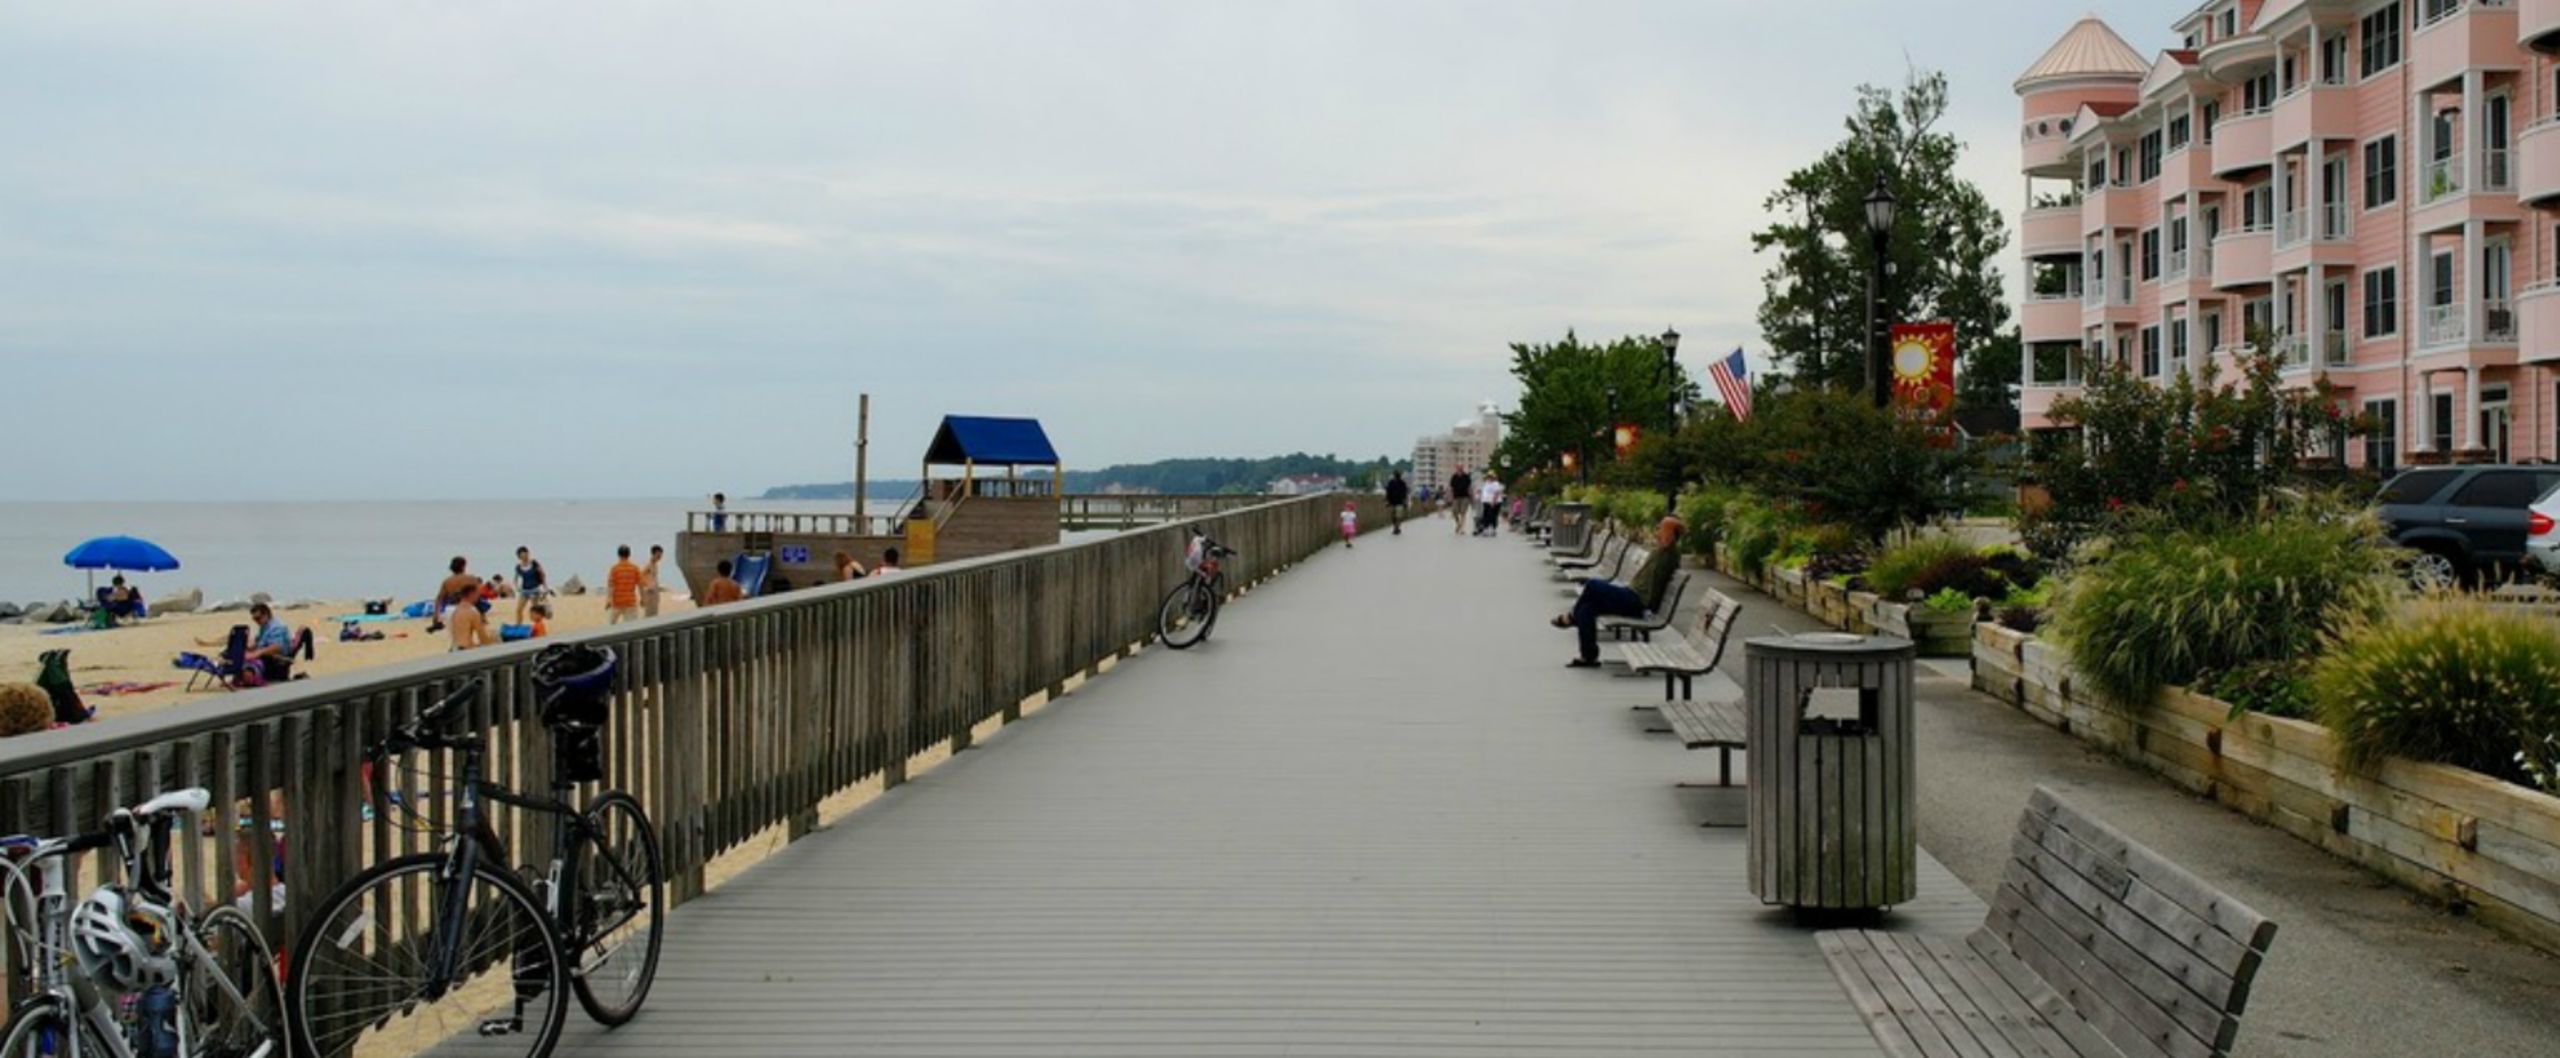 North Beach Boardwalk